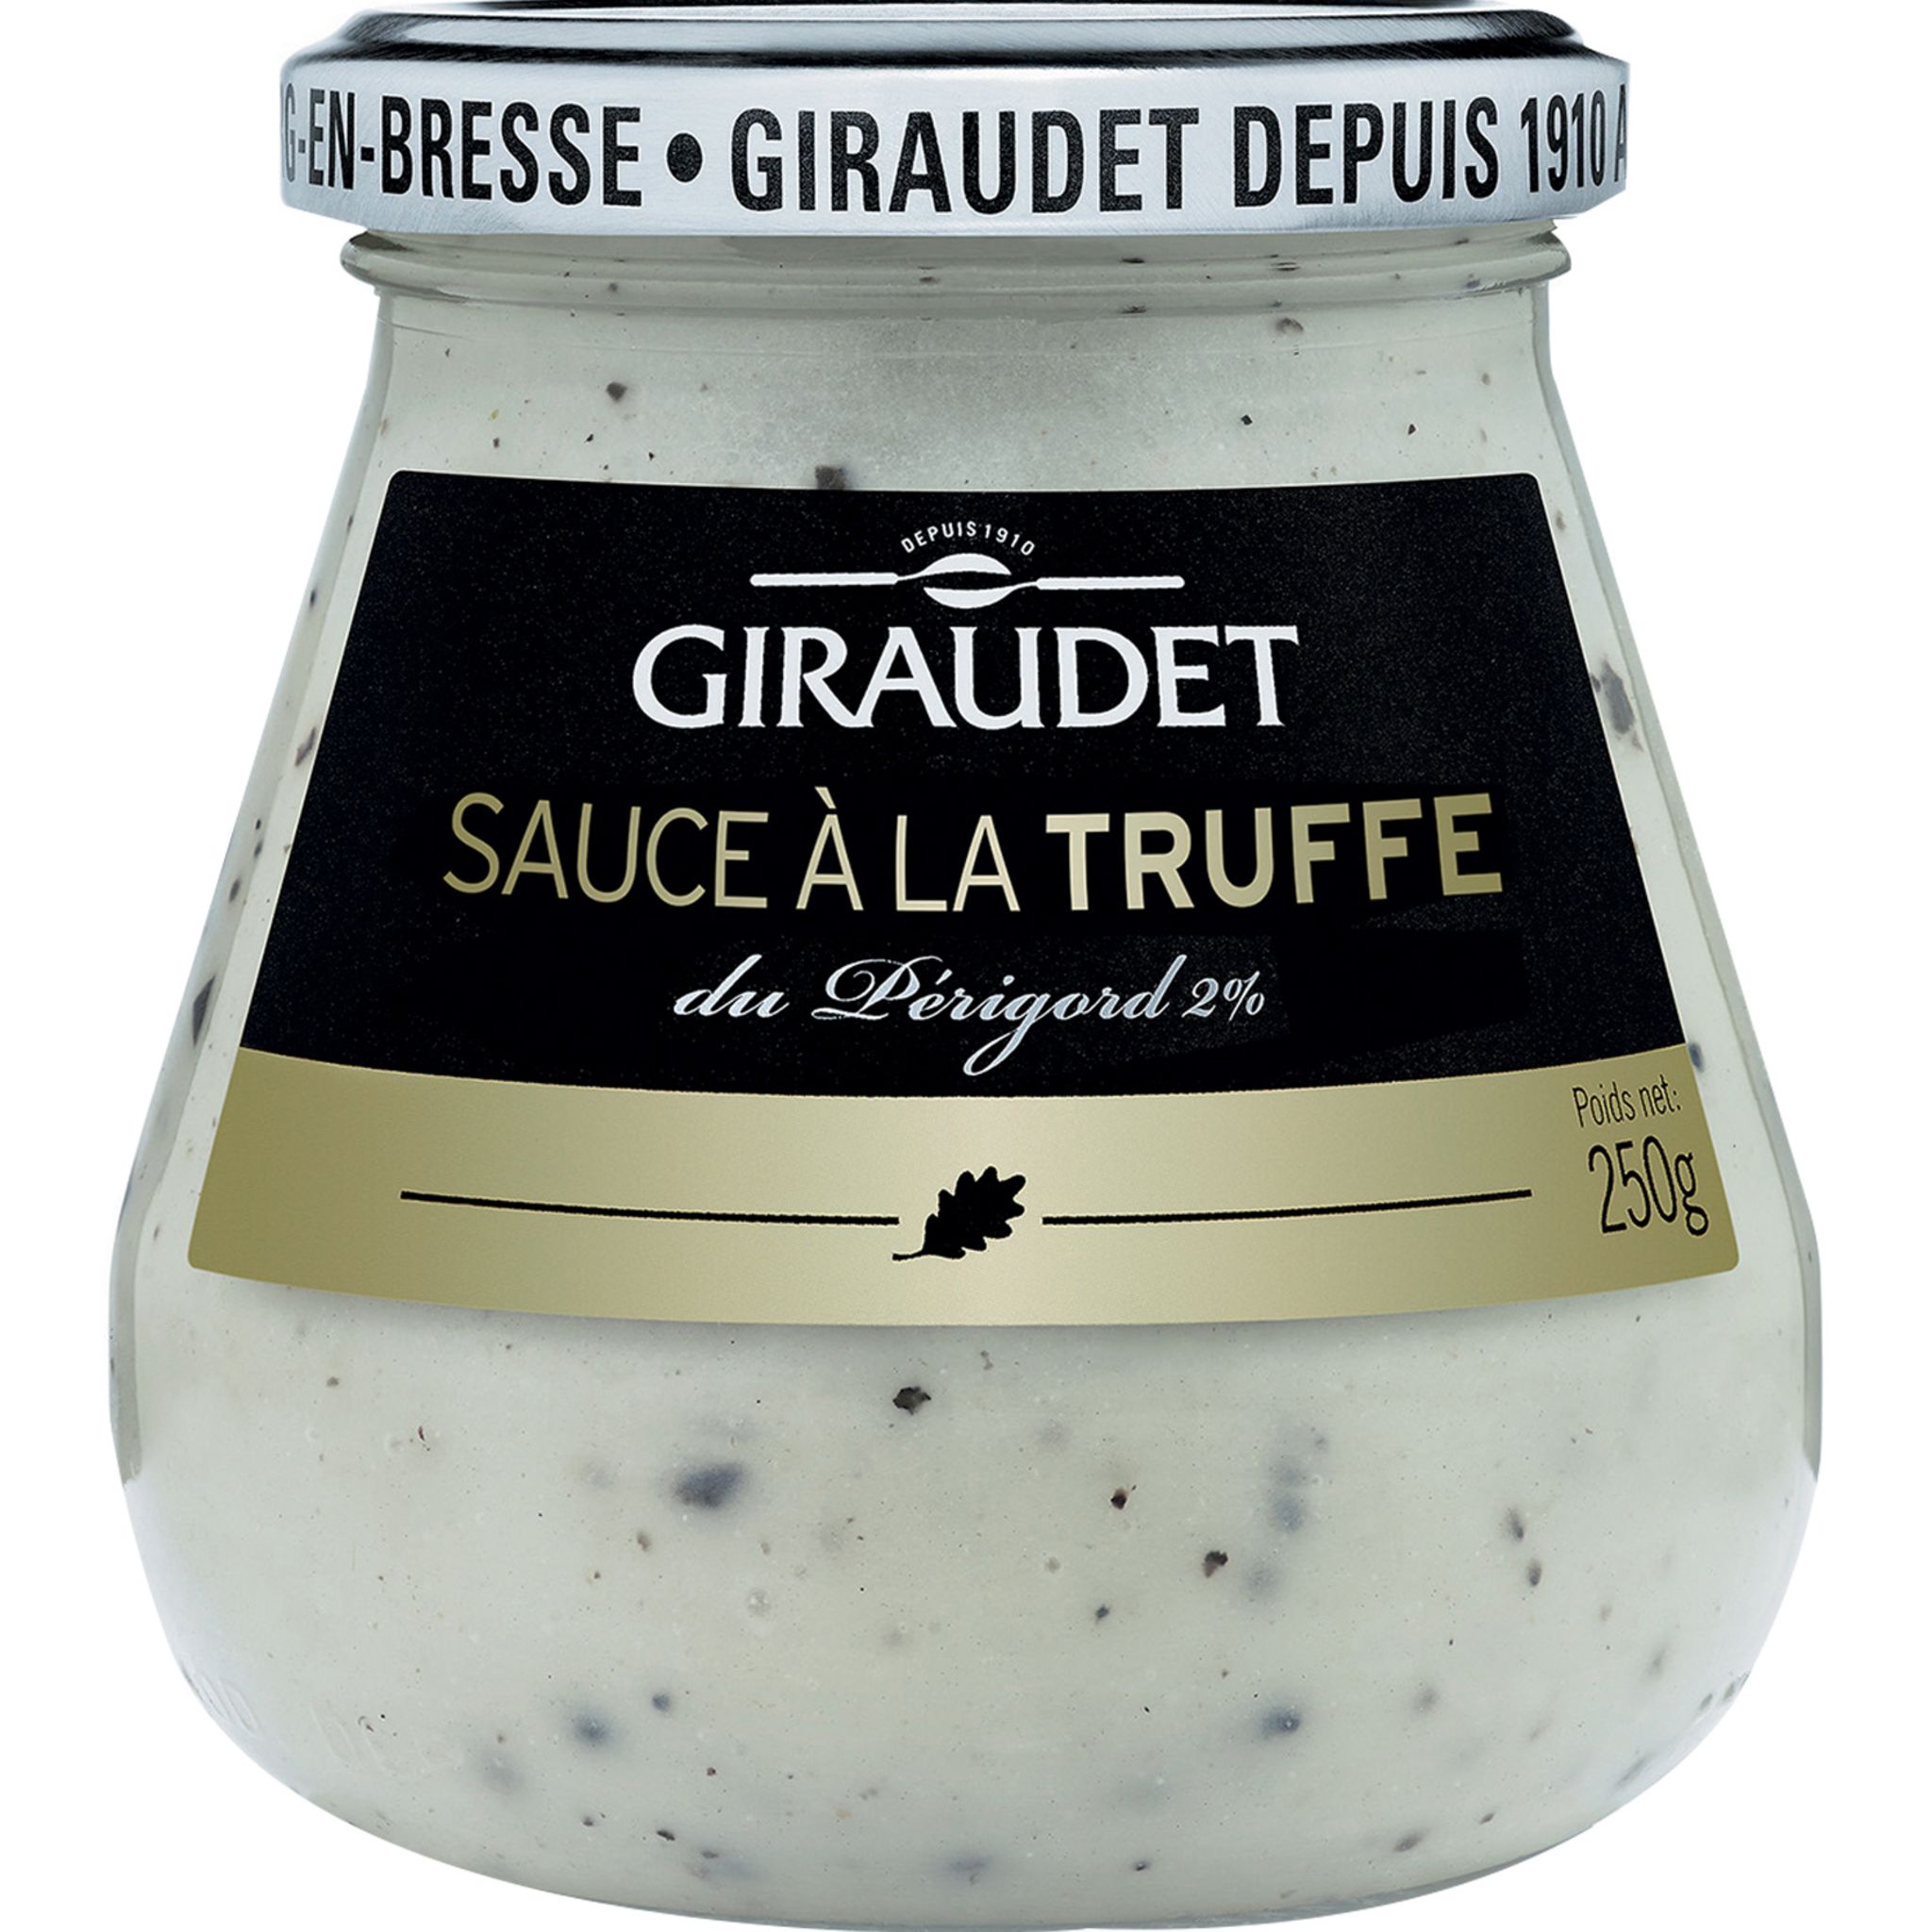 GIRAUDET Giraudet sauce truffe Périgord 2% pas cher 